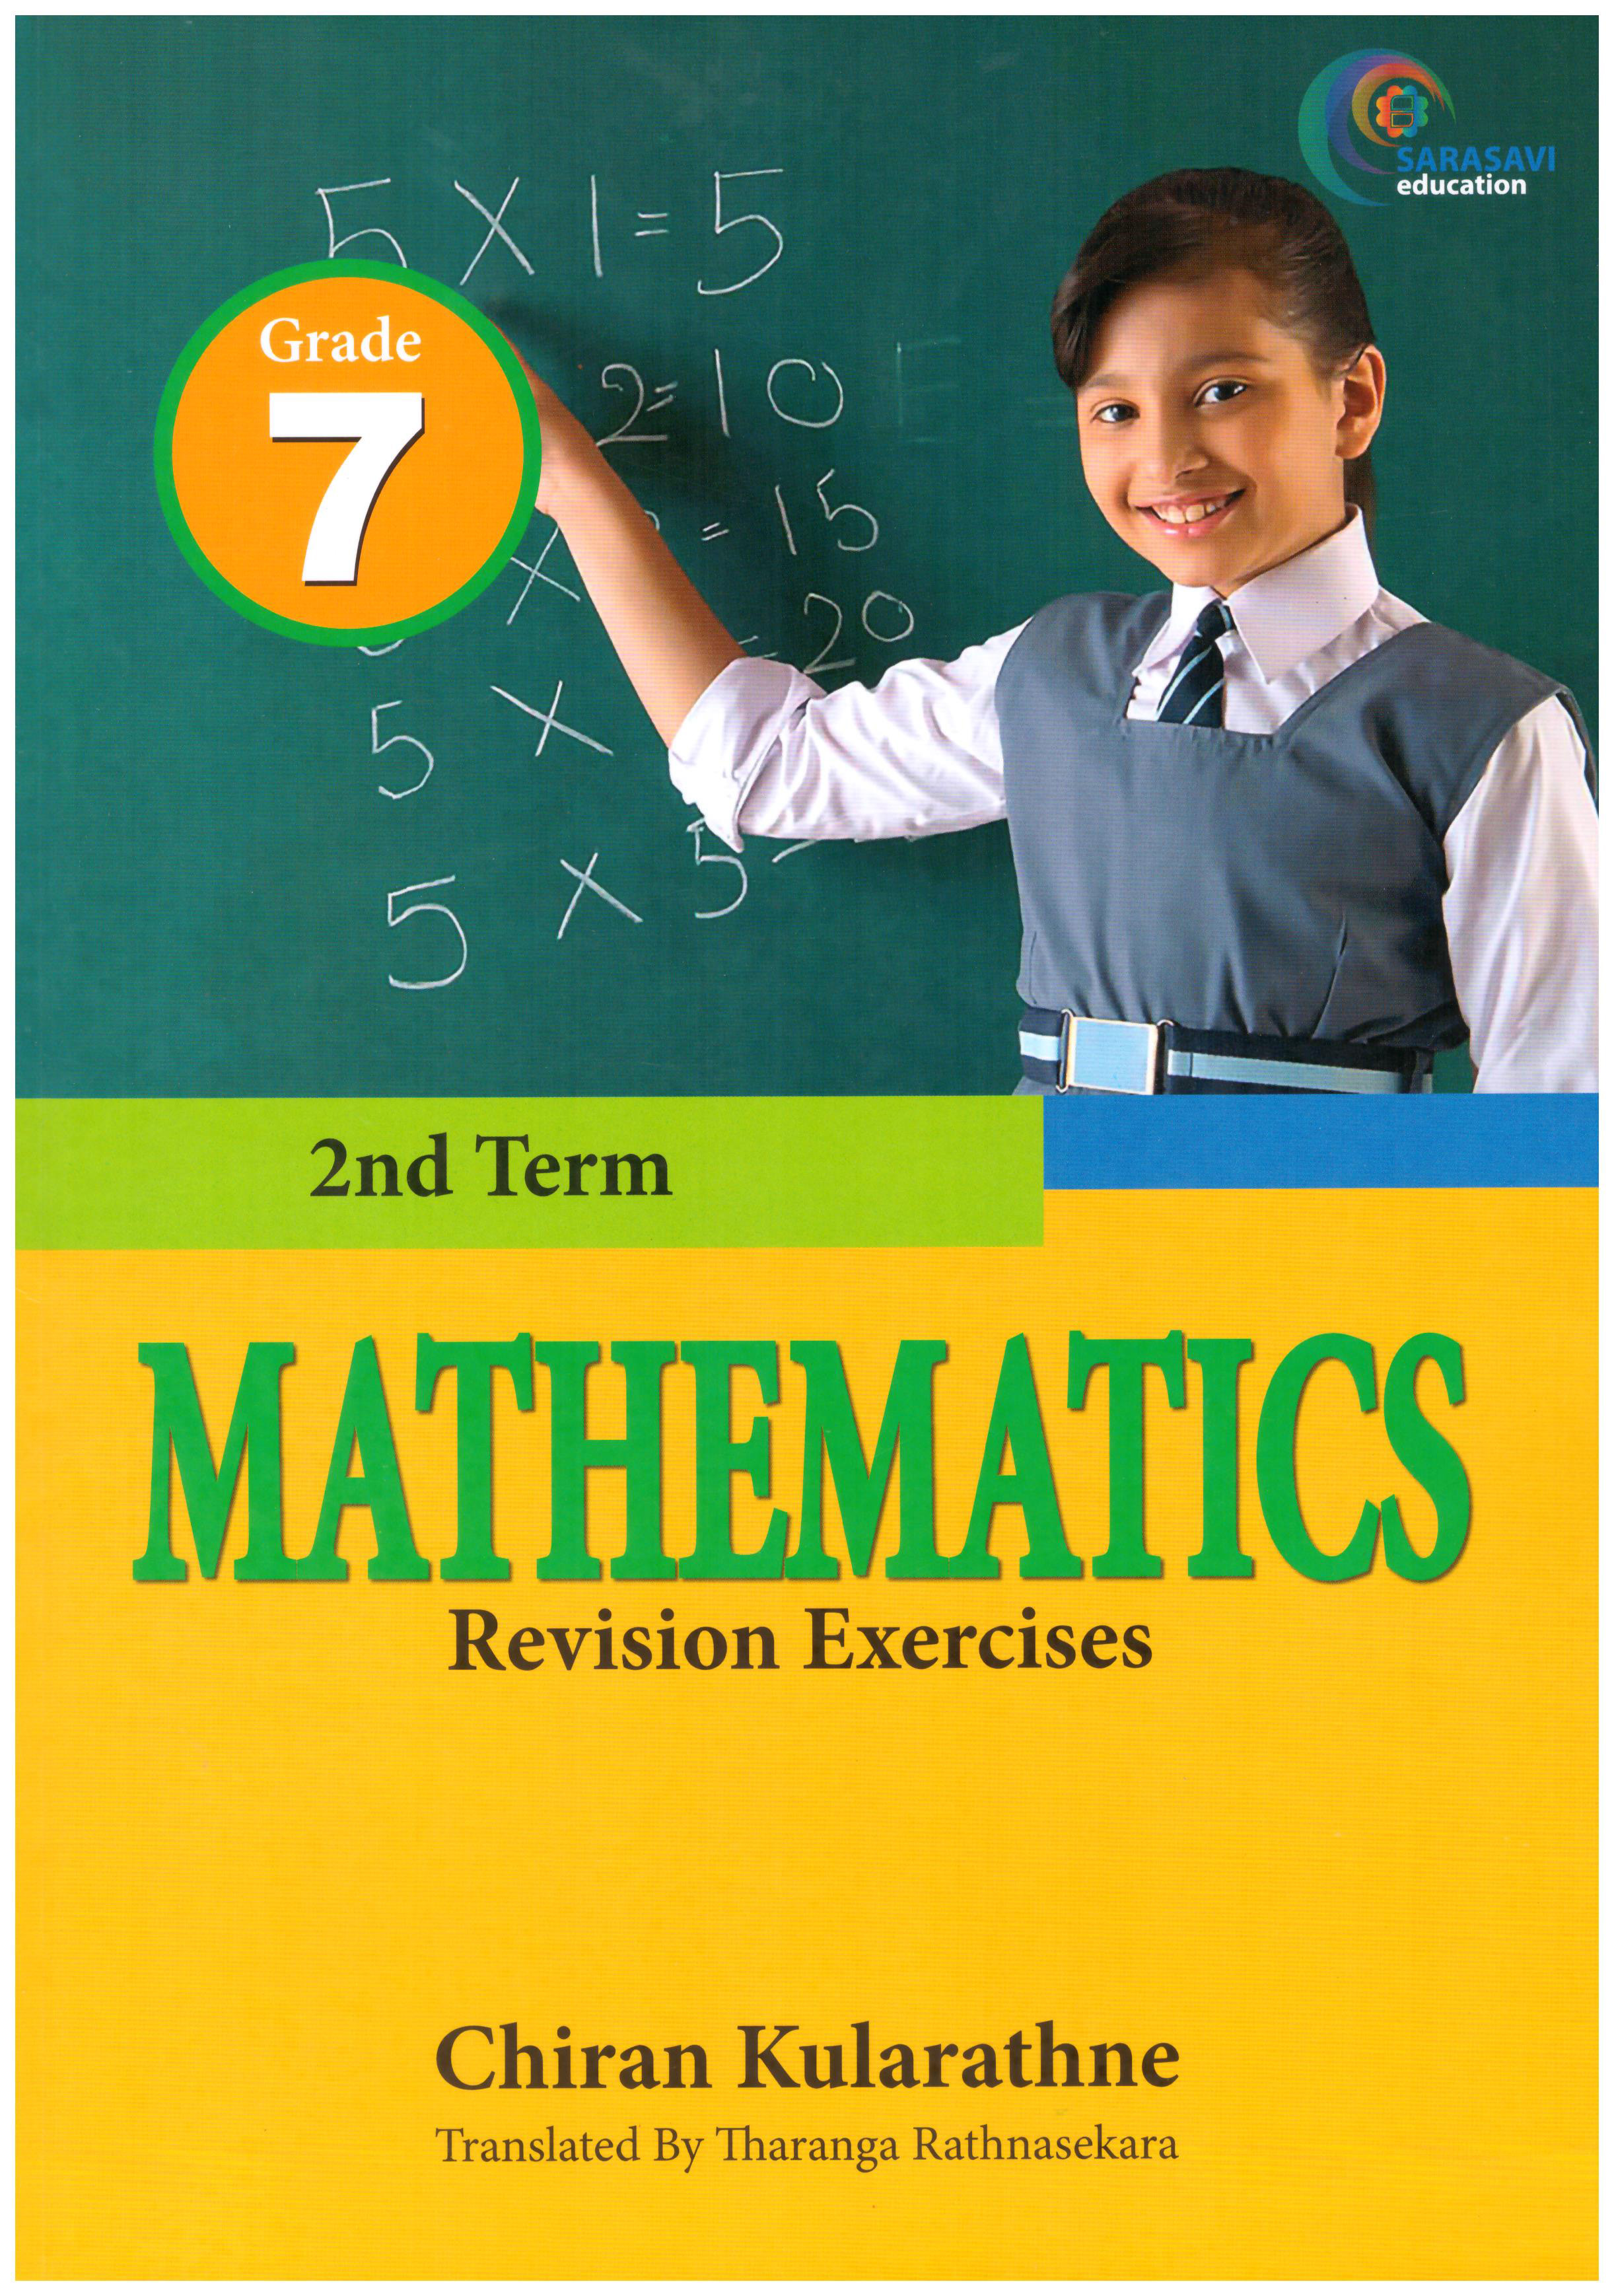 Grade 7 Mathematics Revision Exercises 2nd Term